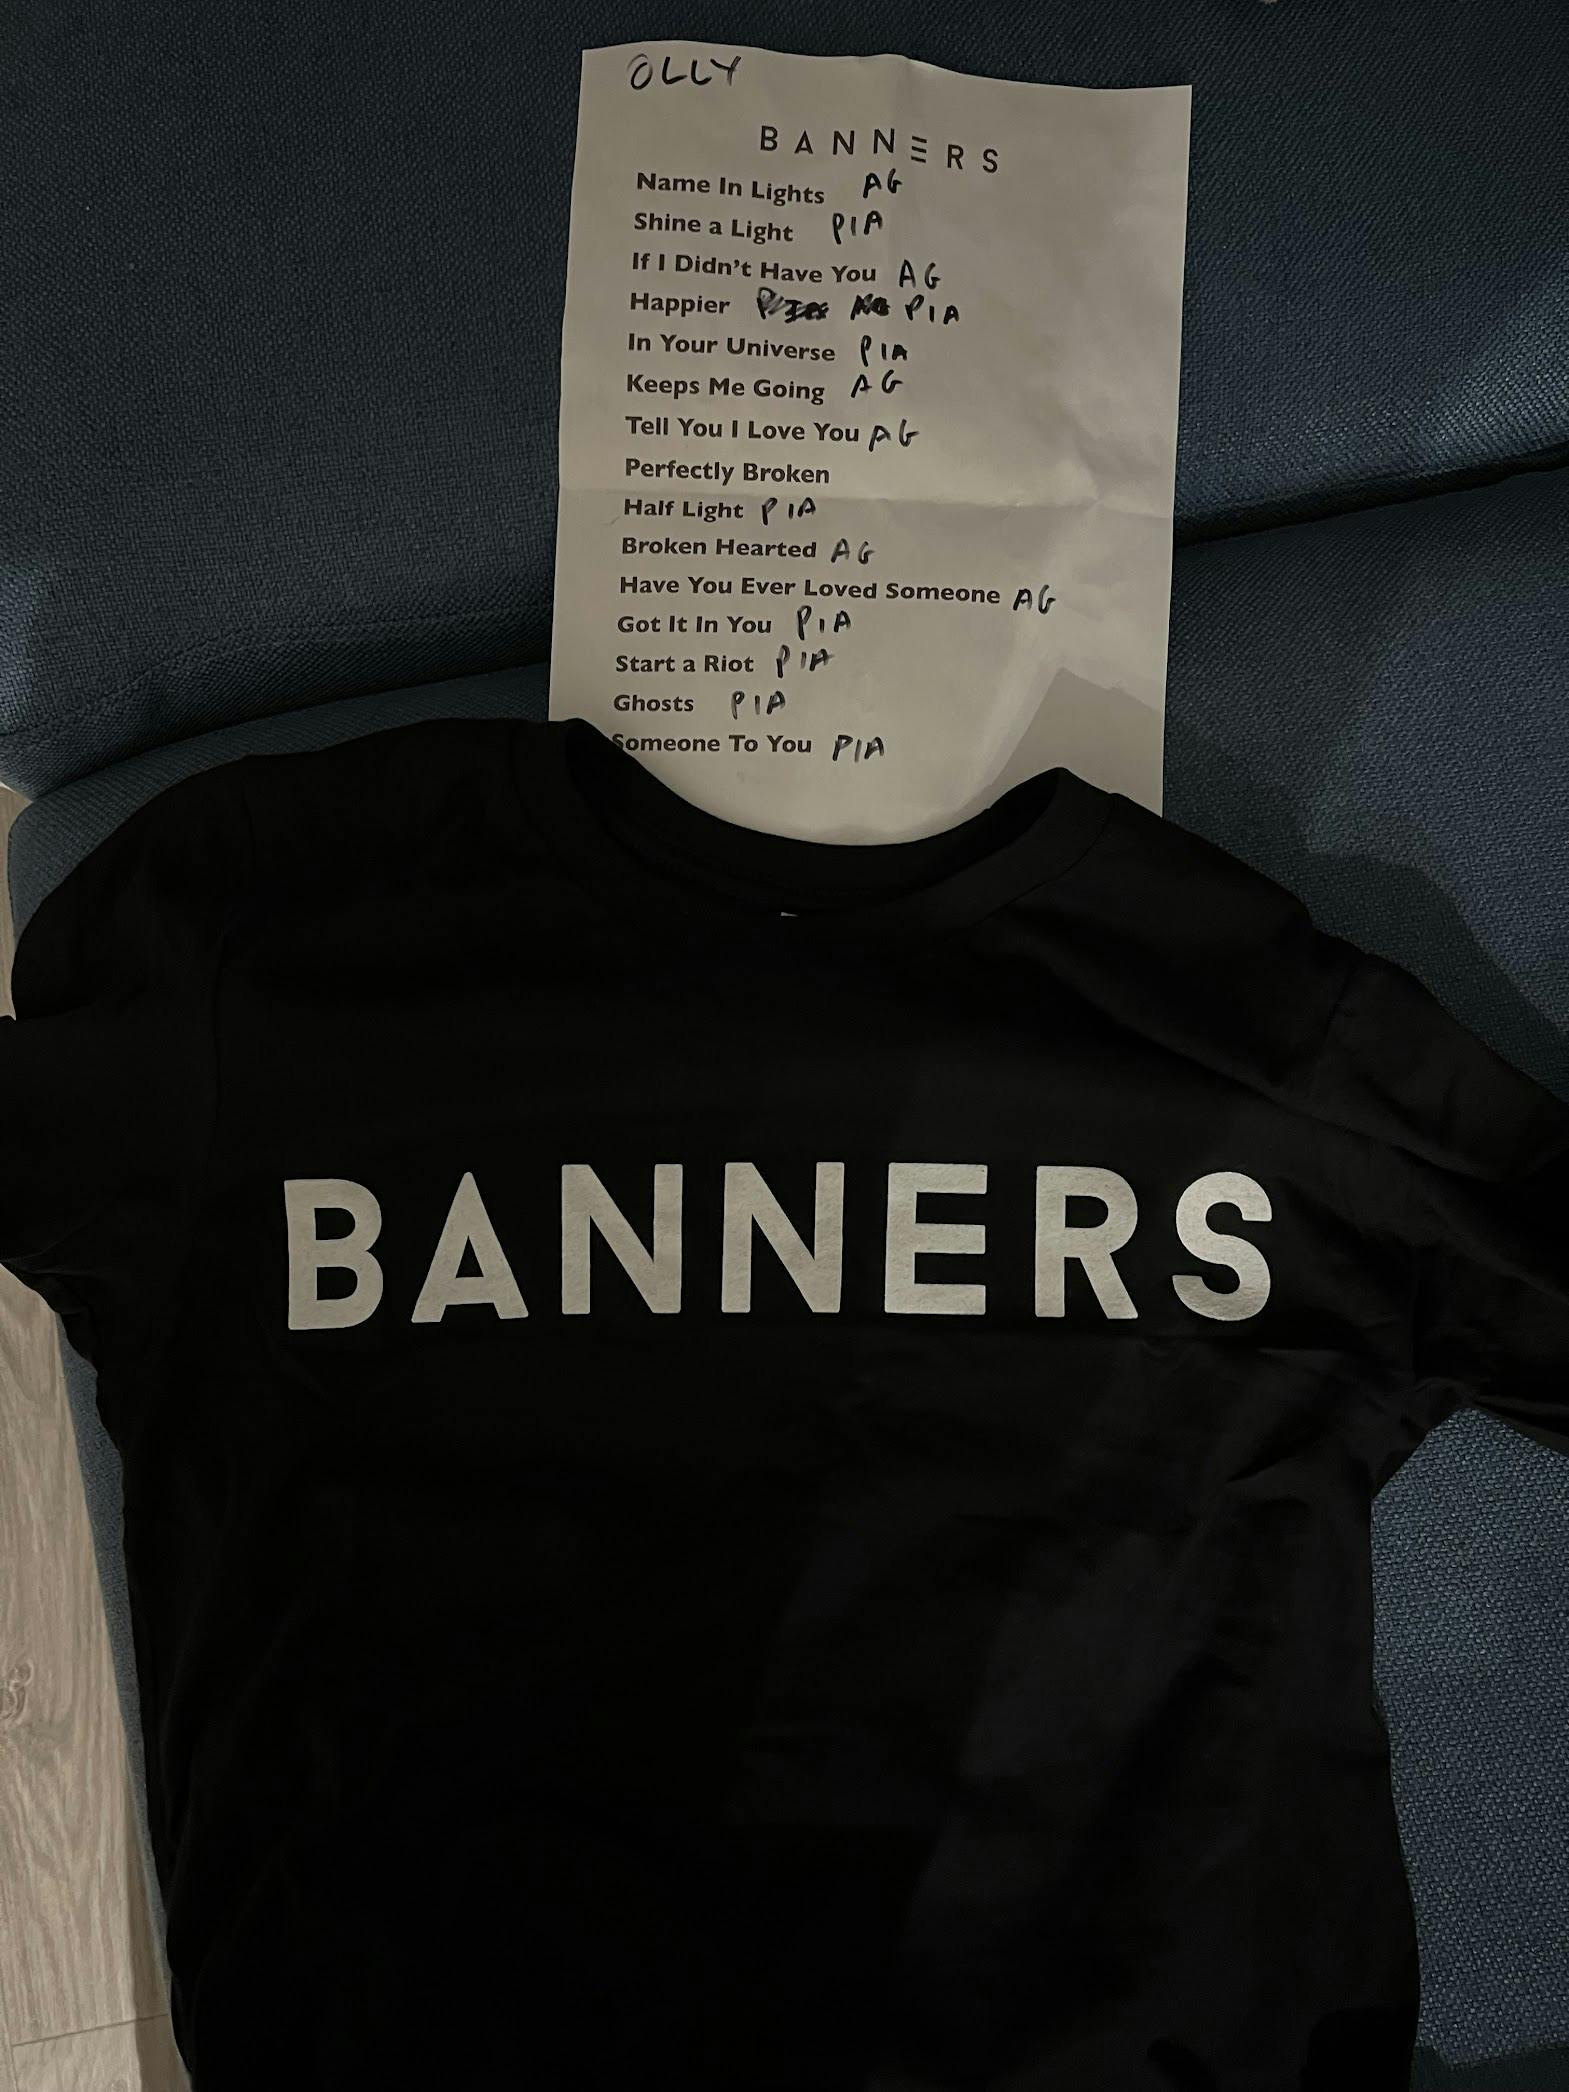 BANNERS T-Shirt and the gig setlist